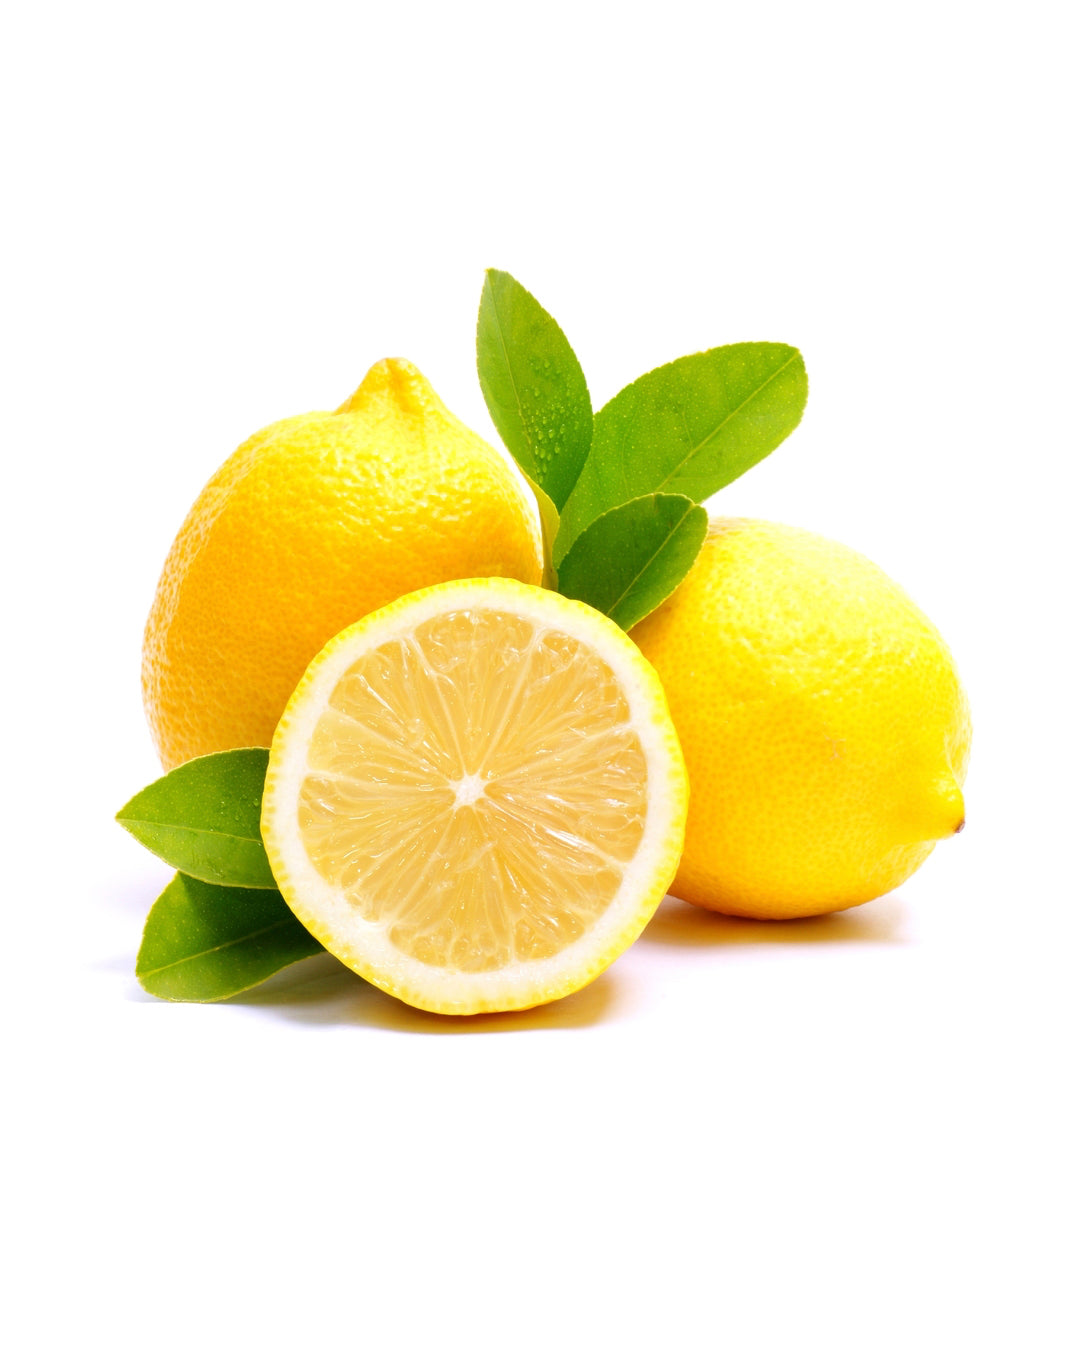 Real lemon on white background